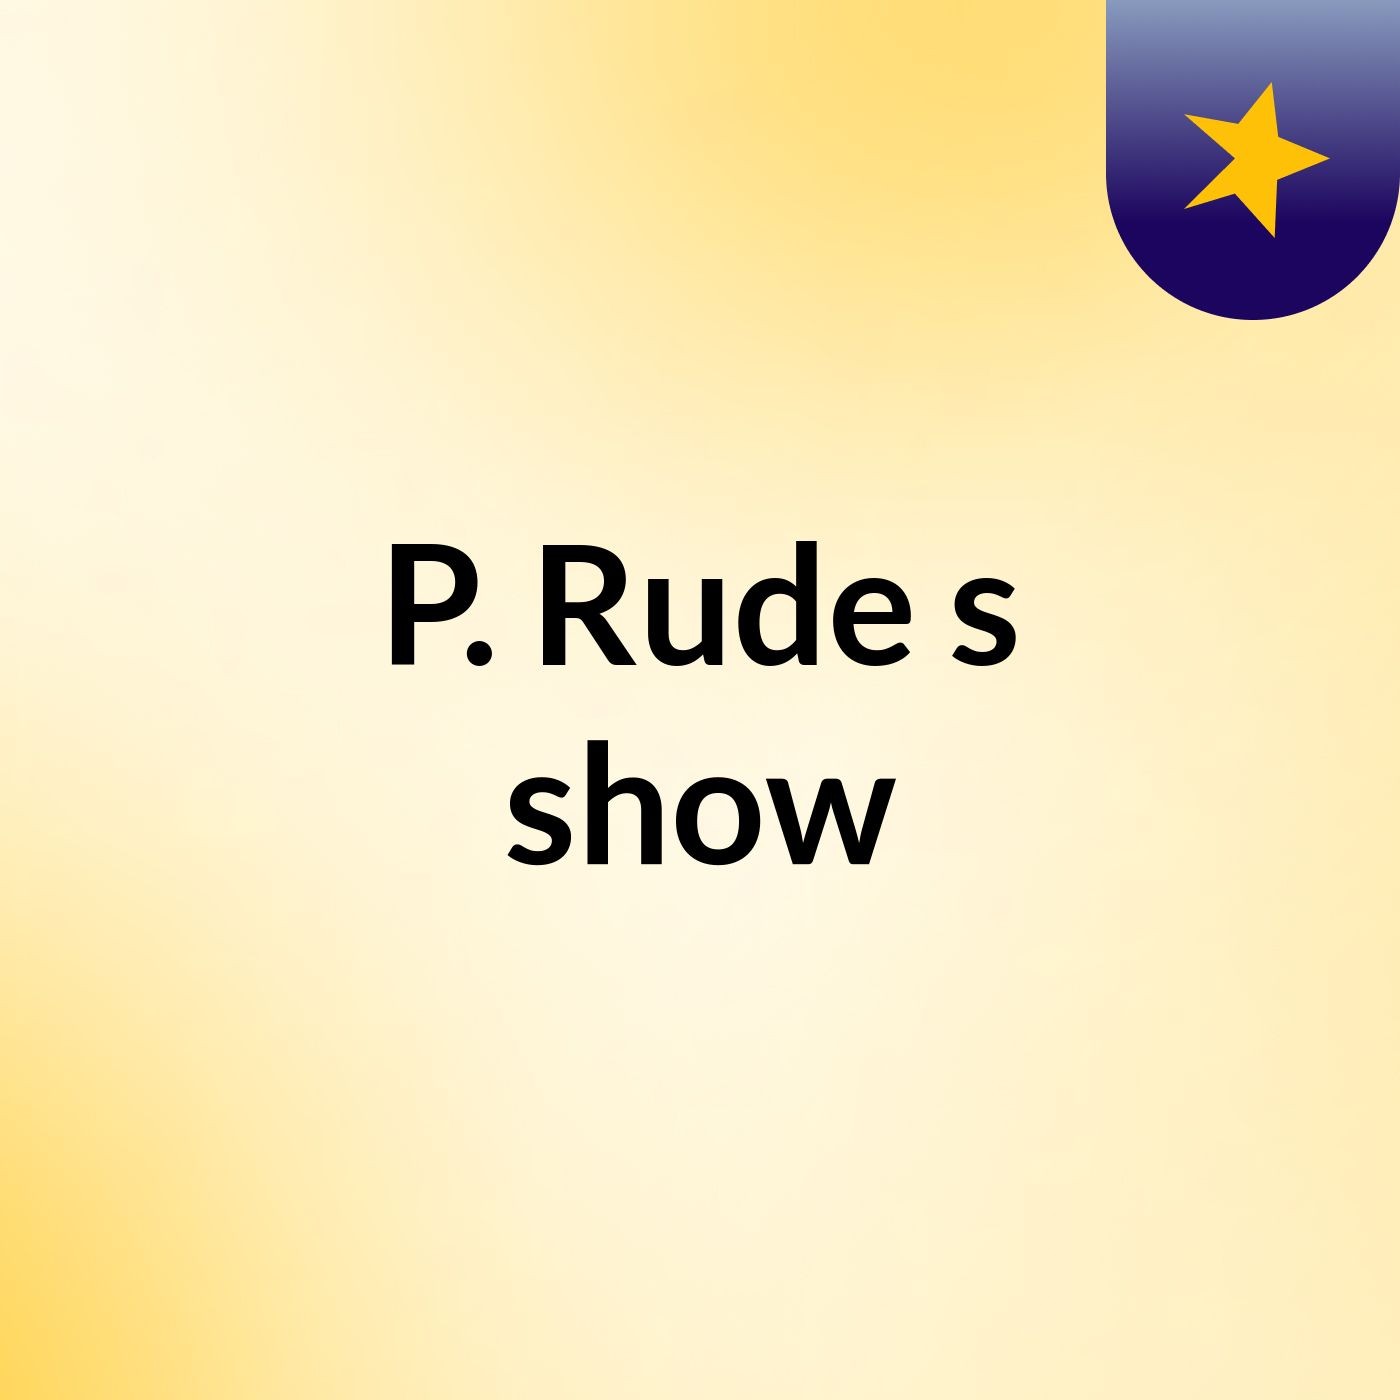 P. Rude's show